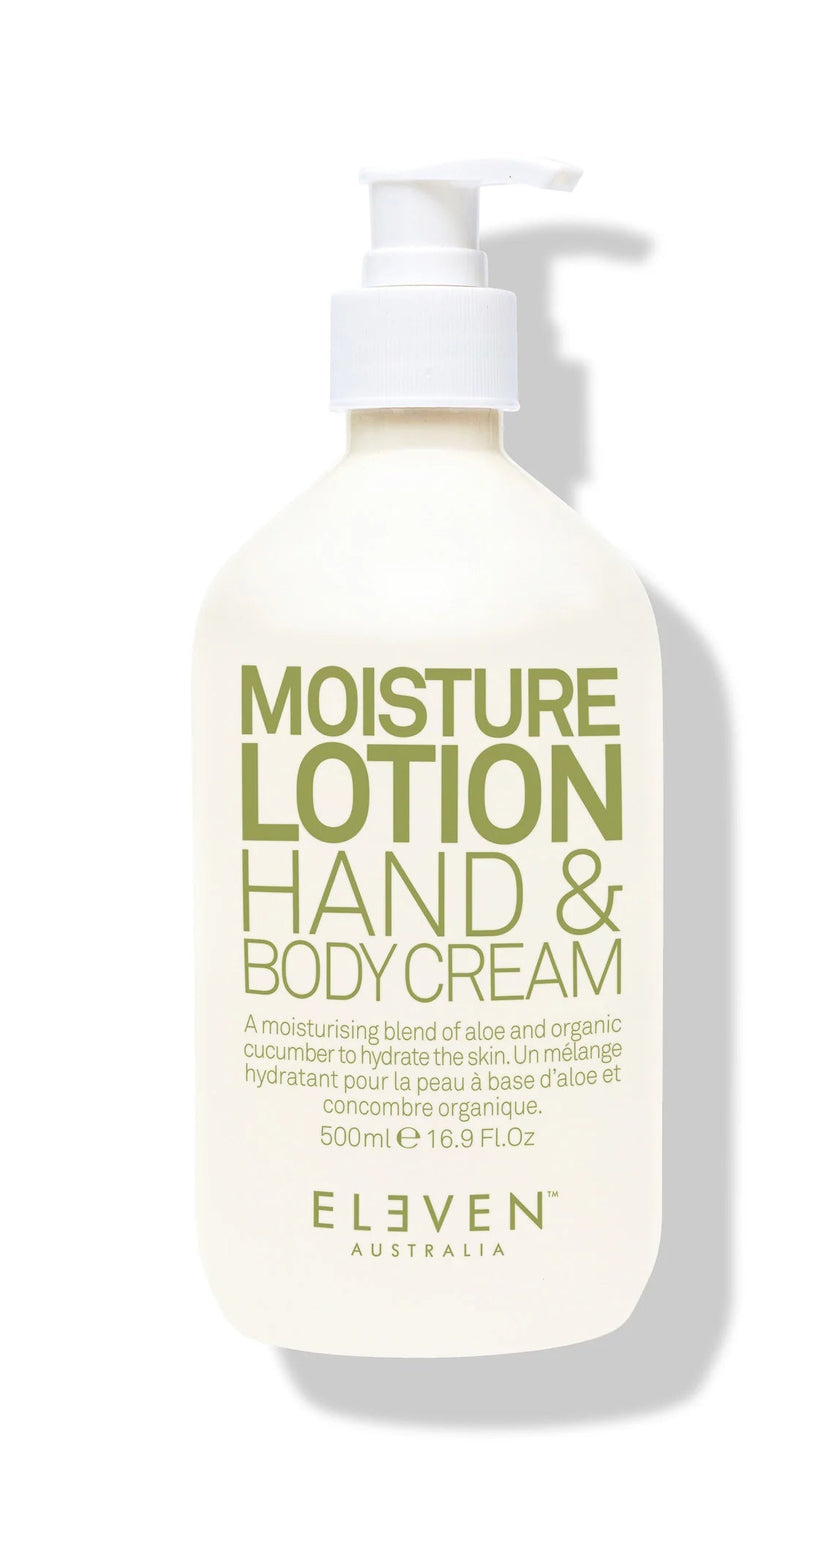 Moisture Lotion - Hand & Body Cream Image